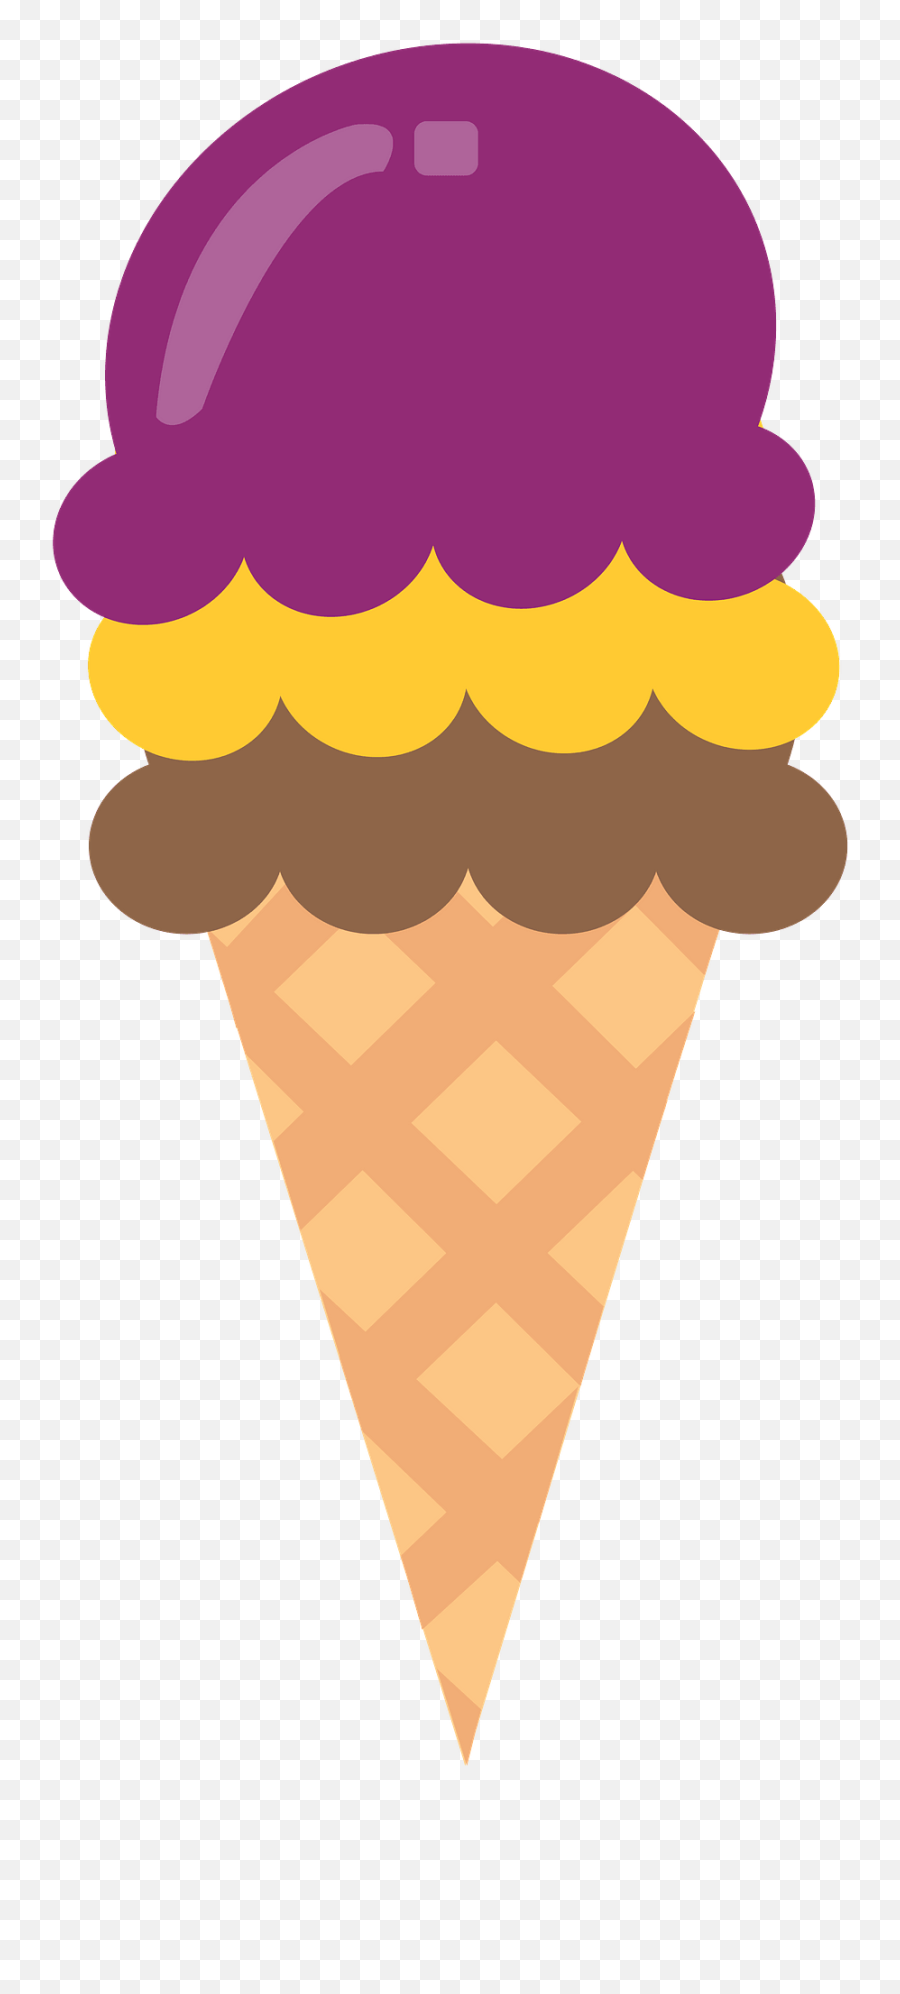 Three Flavors Of Ice Cream On A Cone Clipart Free Download - Ice Cream Rewards For Kids Emoji,Ice Cream Scoop Clipart